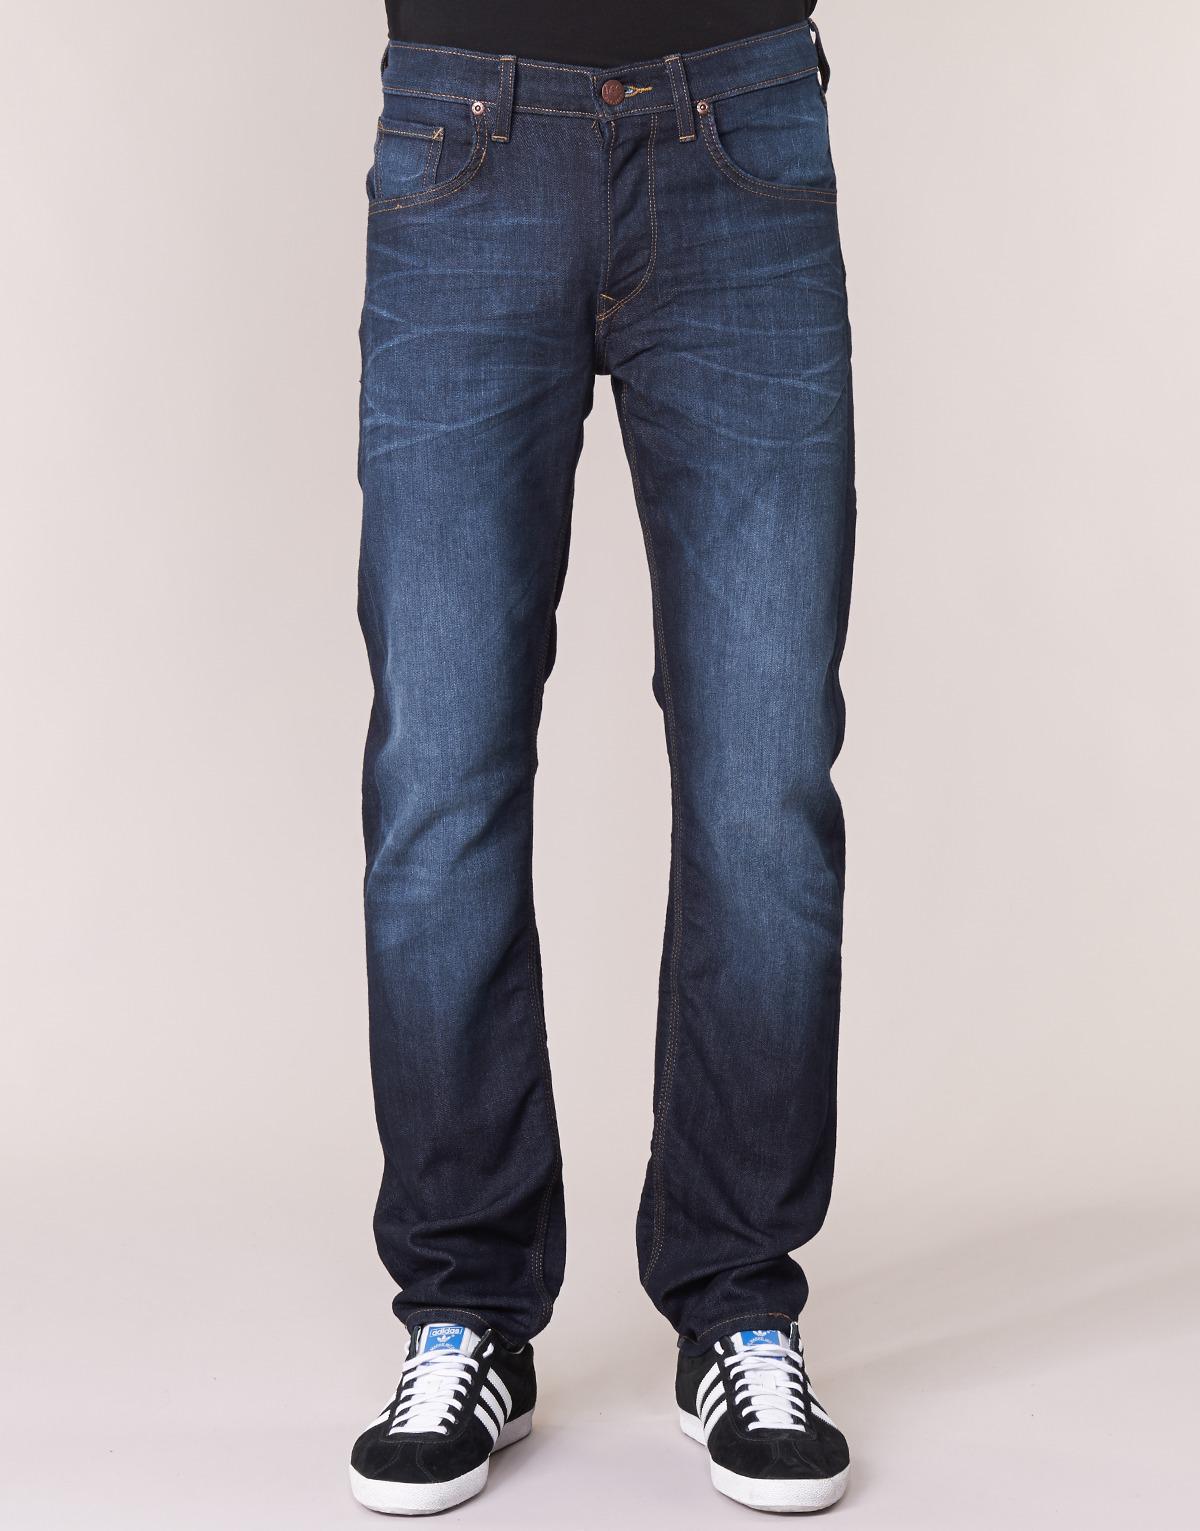 Lee Jeans Denim Daren Jeans in Blue for Men - Lyst